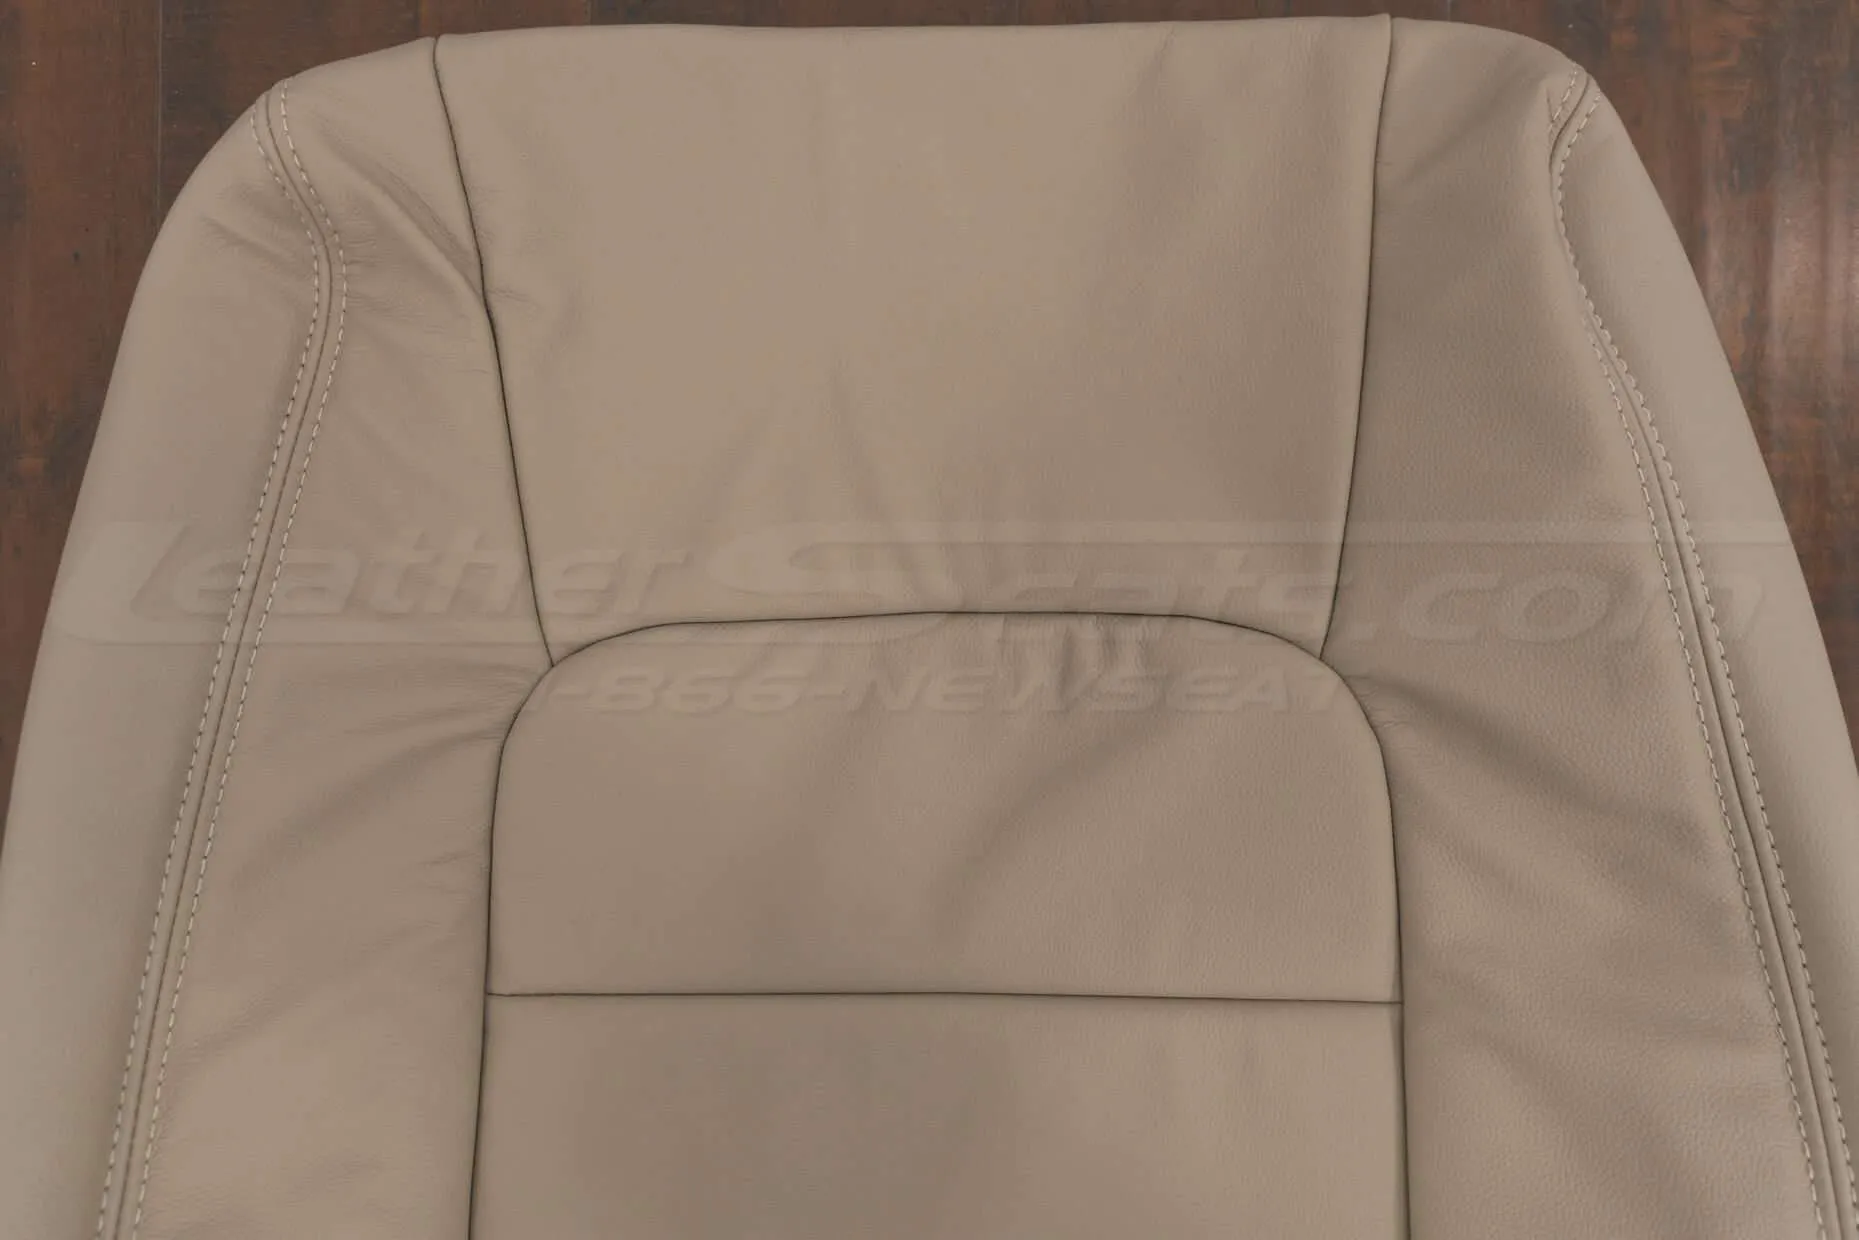 Upper section of front backrest upholstery